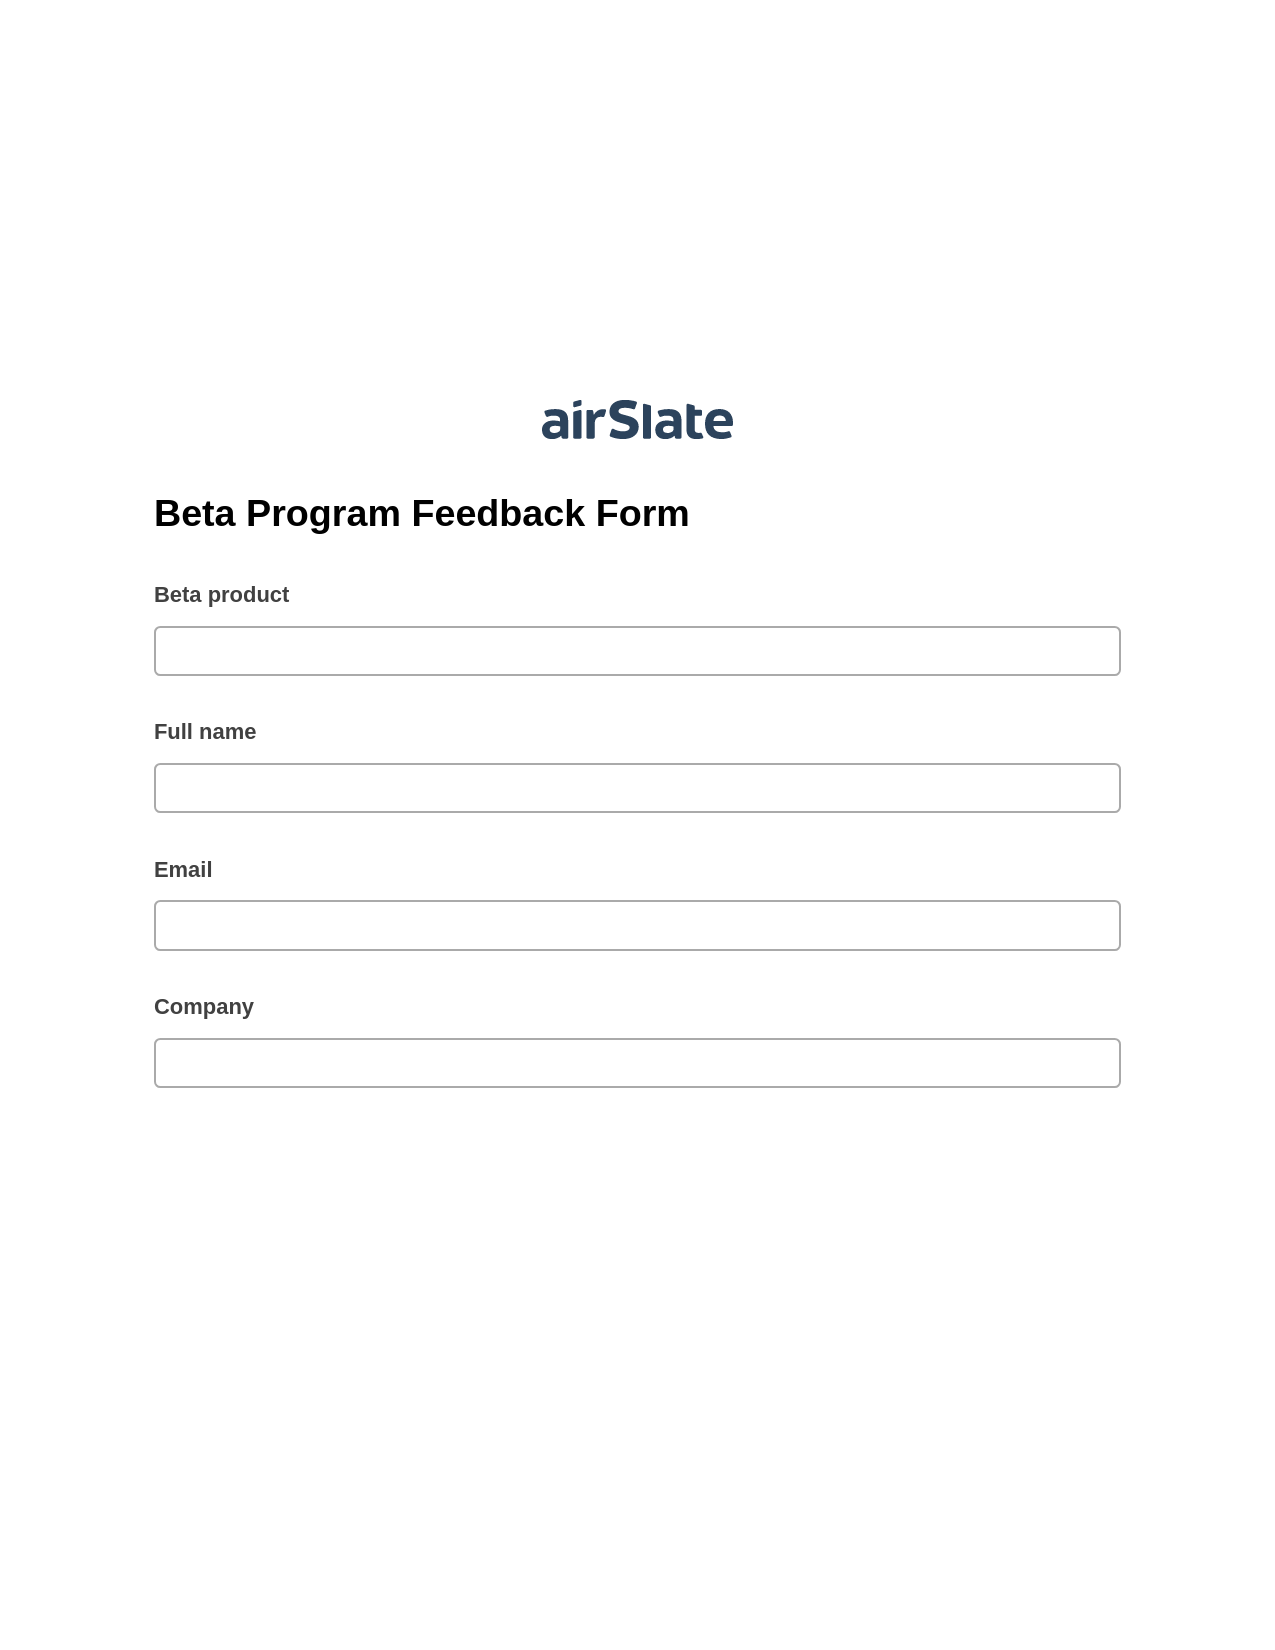 Beta Program Feedback Form Pre-fill from Google Sheets Bot, Reminder Bot, Google Drive Bot